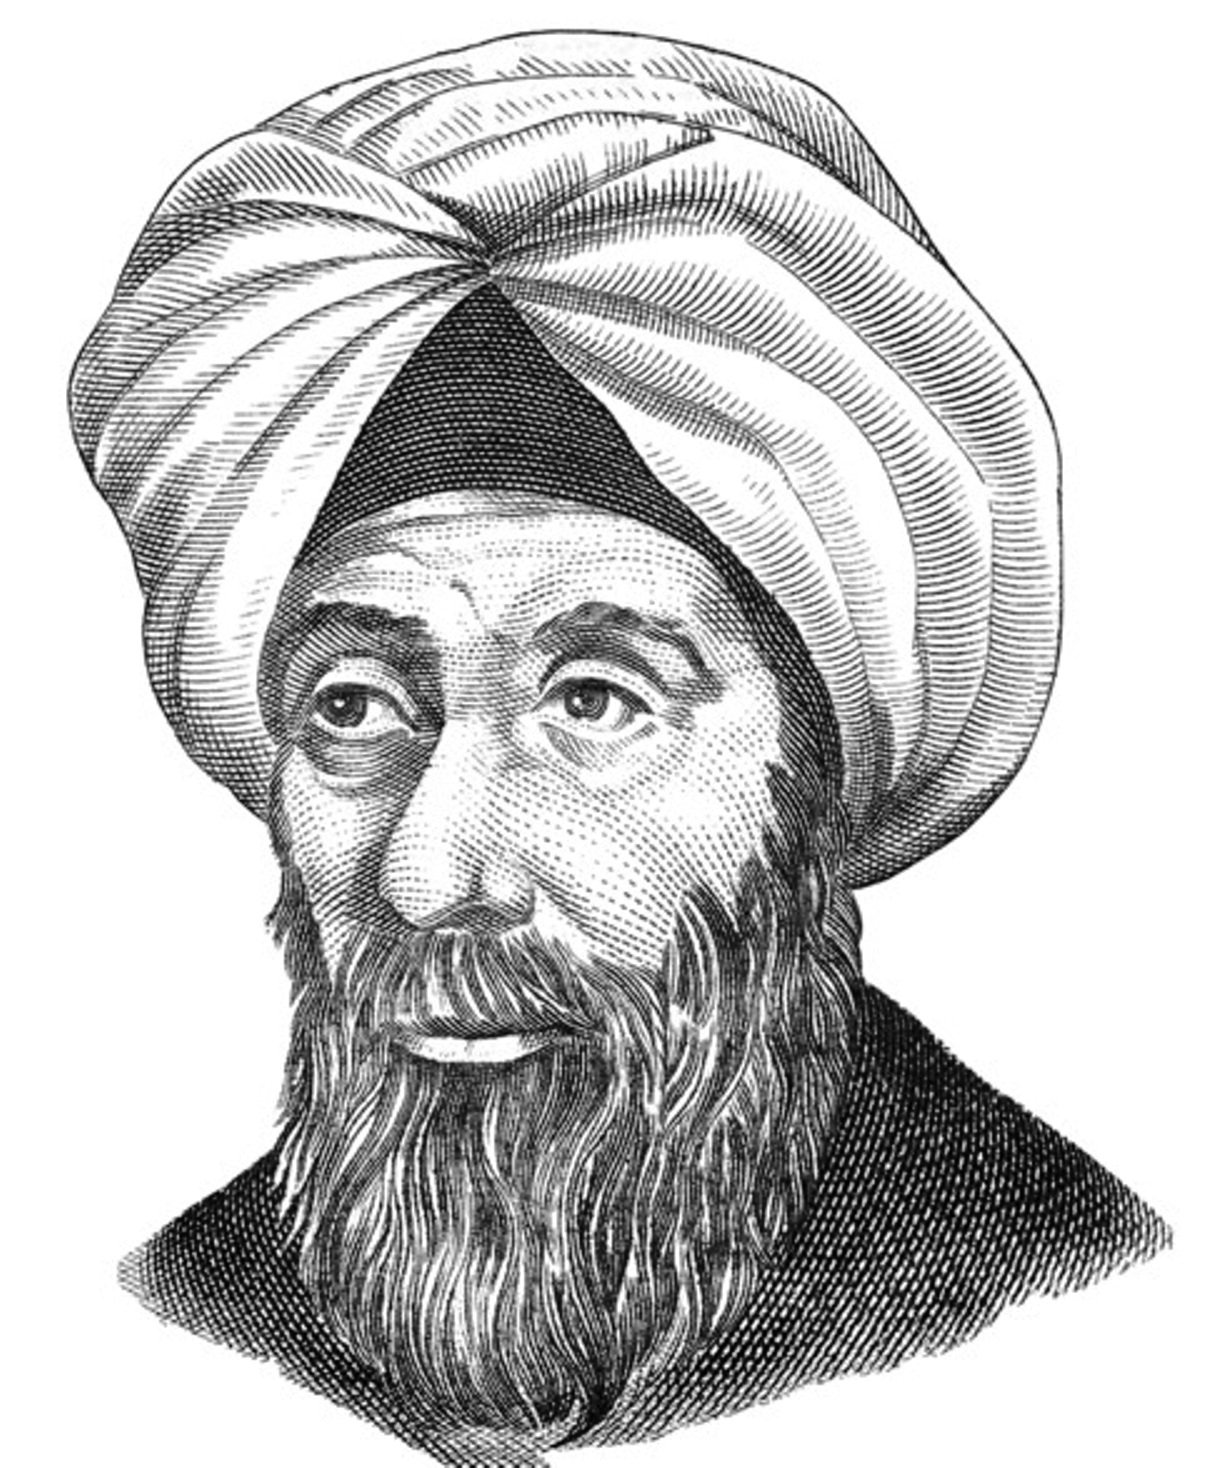 Ибн аль ханбали. Ибн Аль-Хайсам. Ибн ал-Хайсам (Альгазен) (965-1039). Арабский ученый ибн Аль-Хайсам. Ибн Аль-Хайтама (Альхазена).